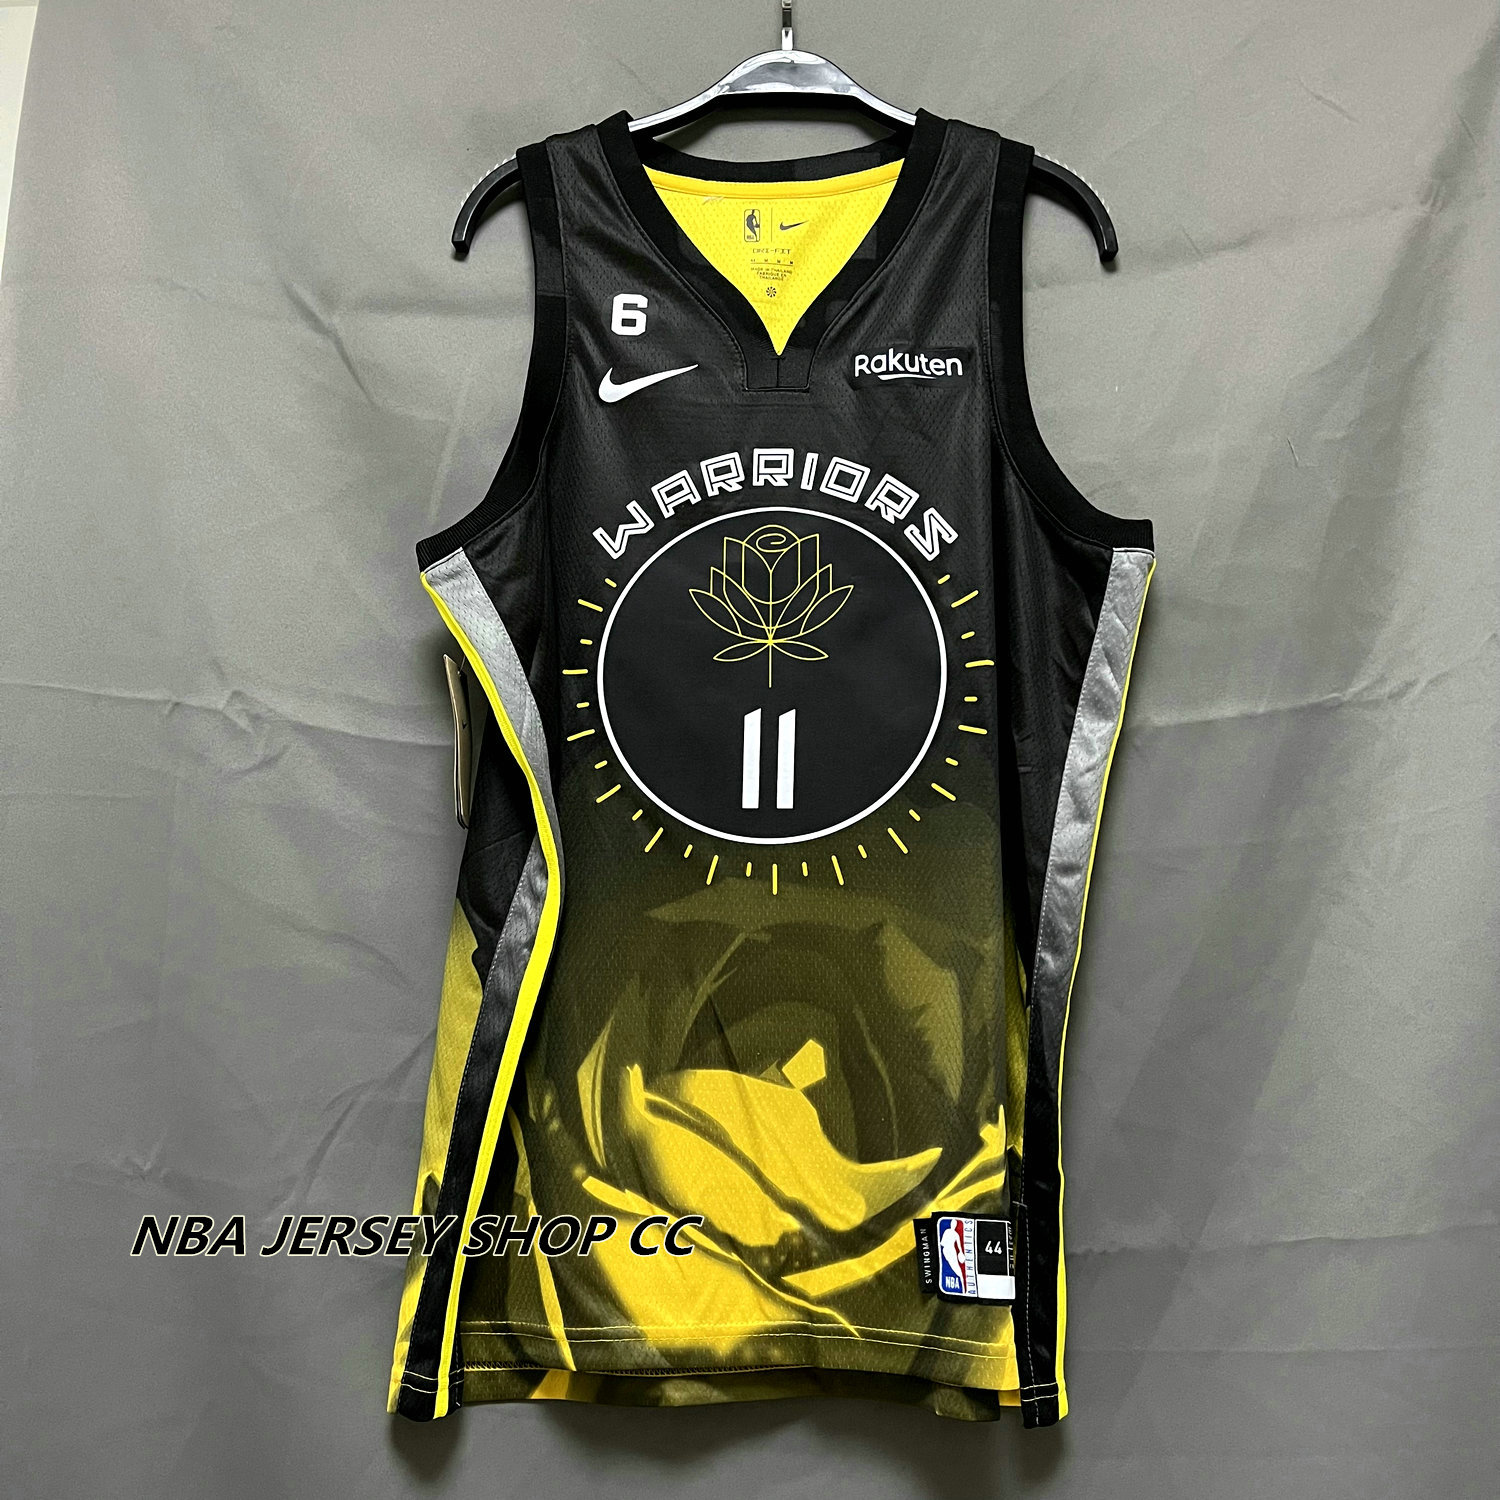 Warriors Thompson city edition jersey